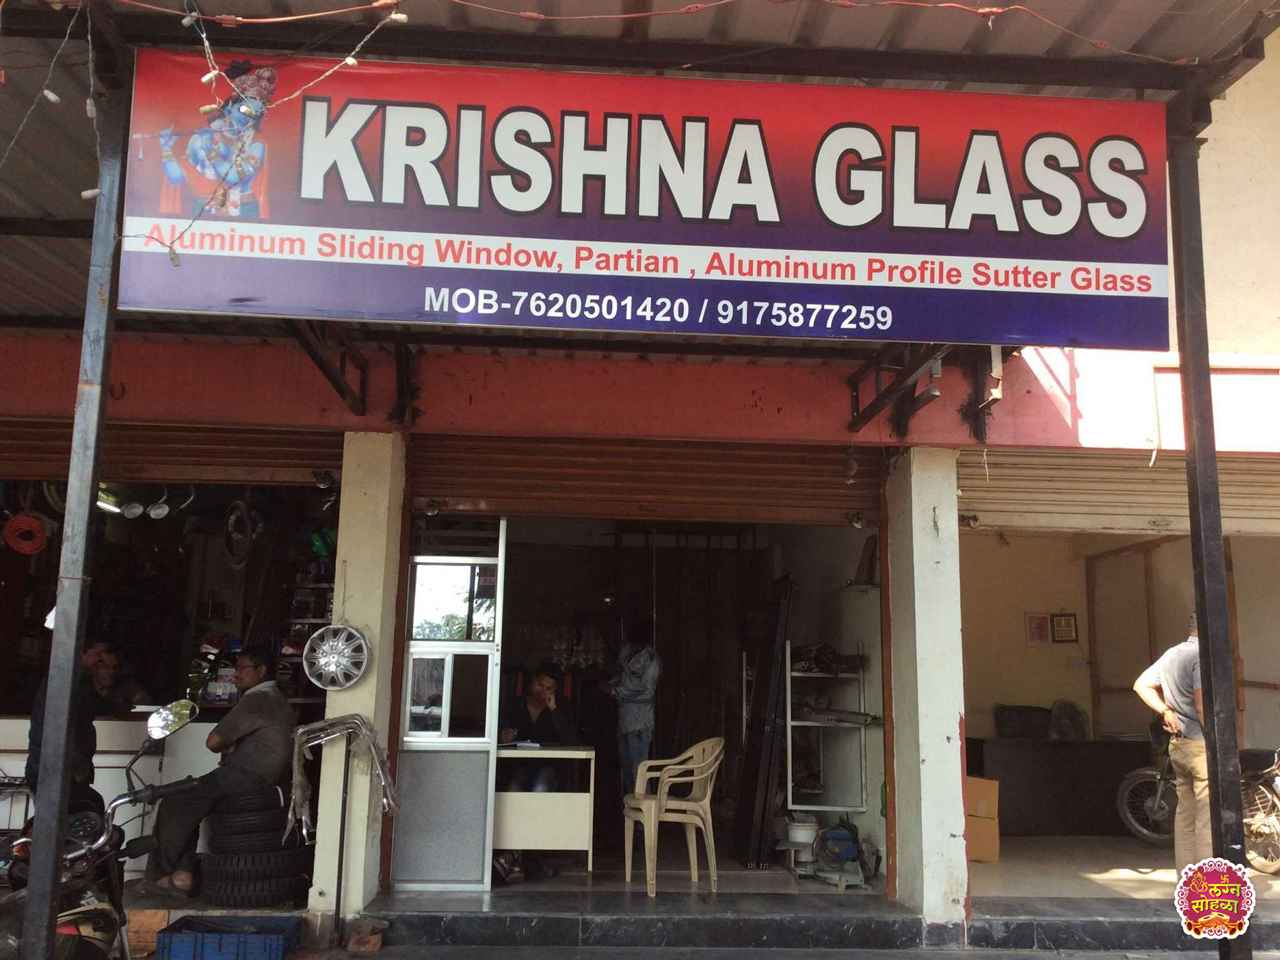 Krishna Glass